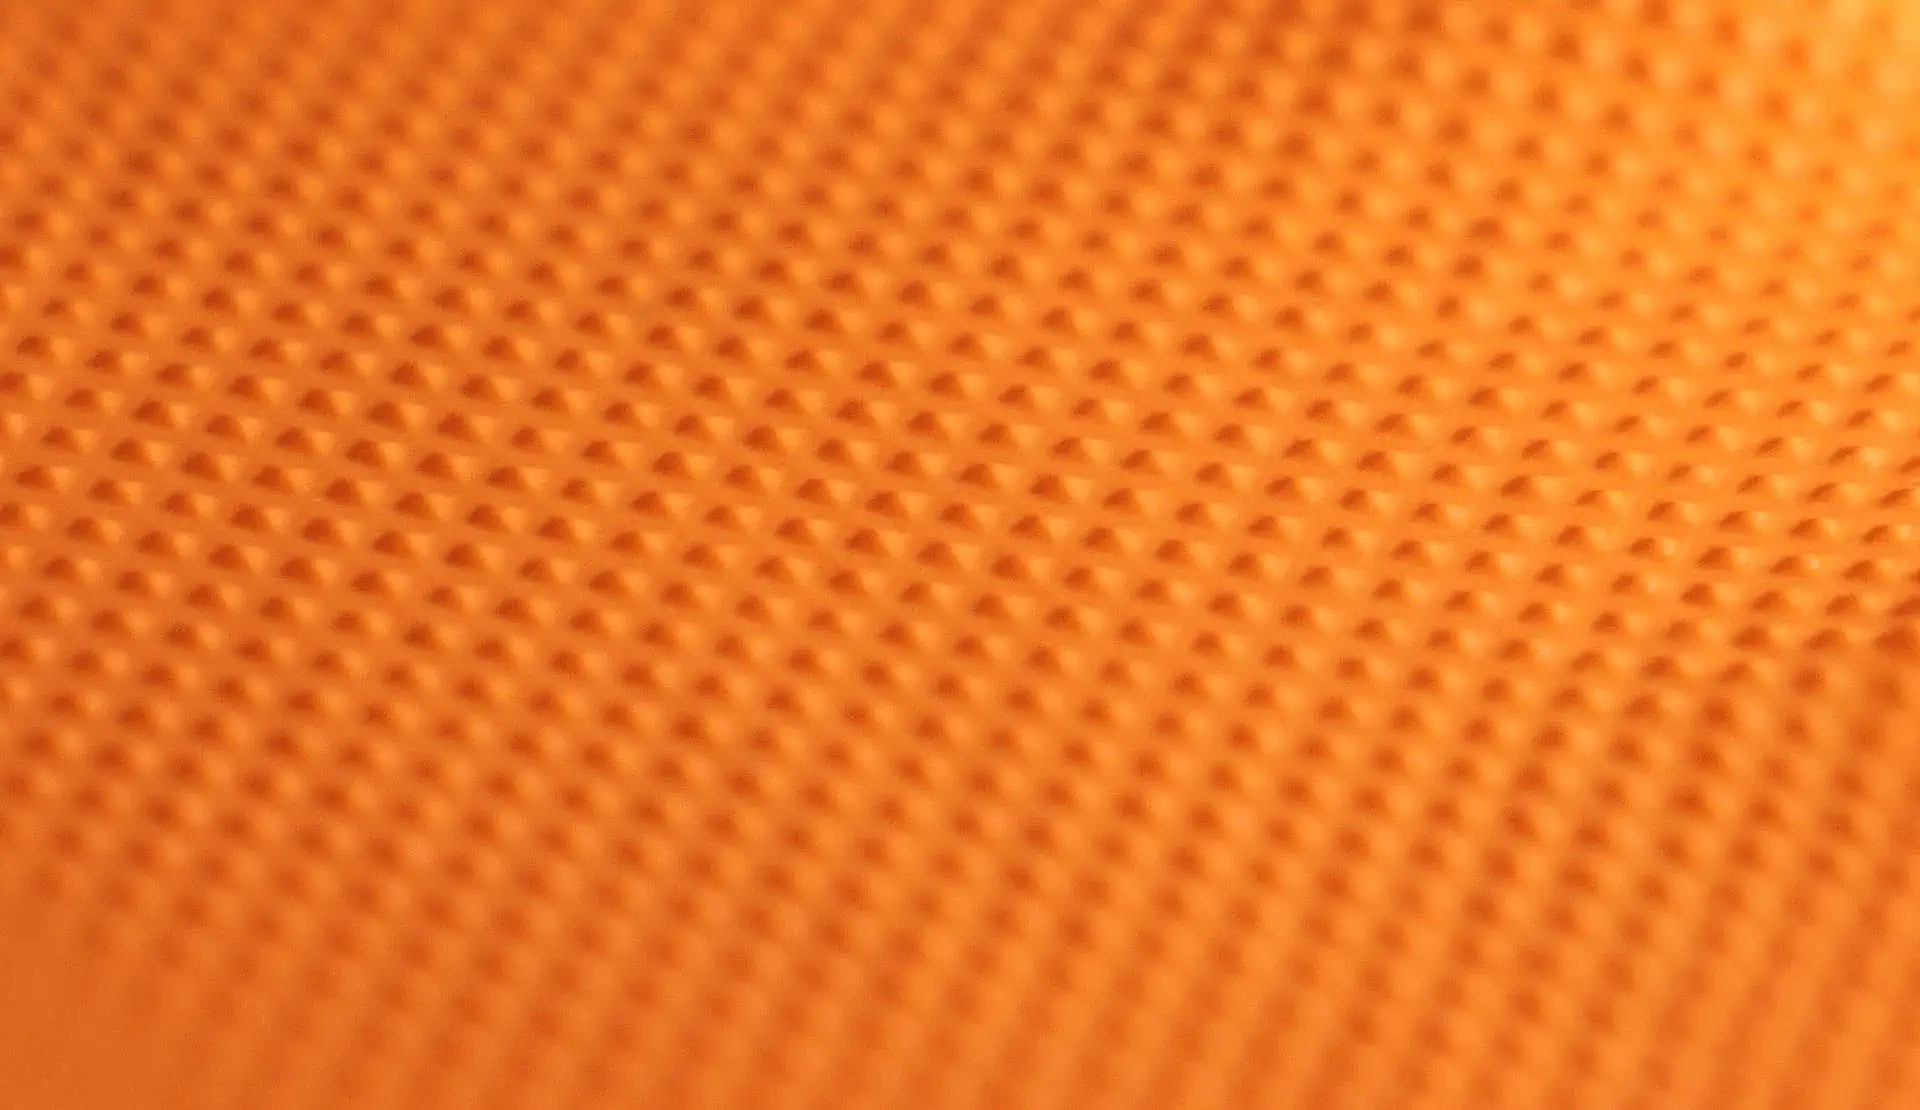 Nitrile Disposable Glove X-Grip orange 50 pcs.